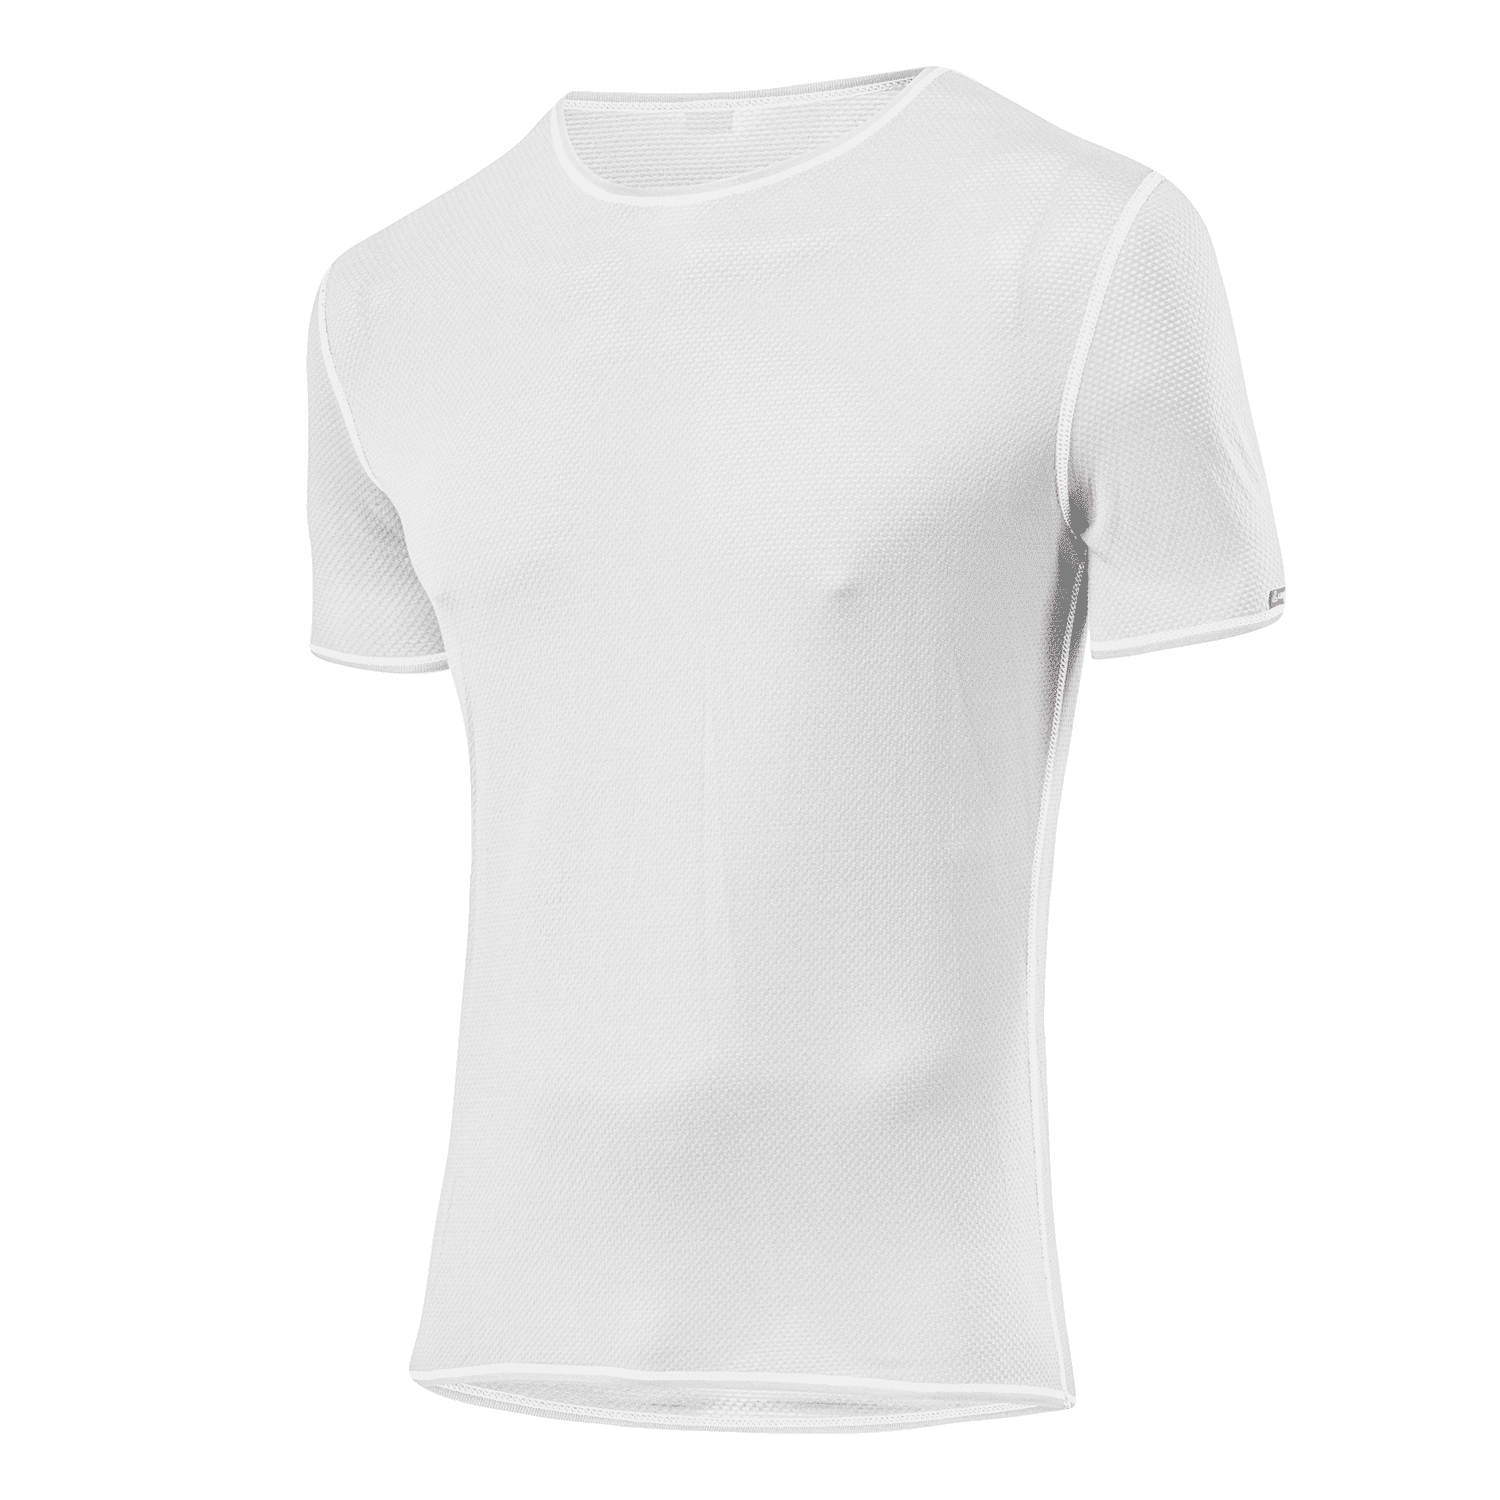 Löffler Shirt S/S Transtex Light - Intimo - Uomo